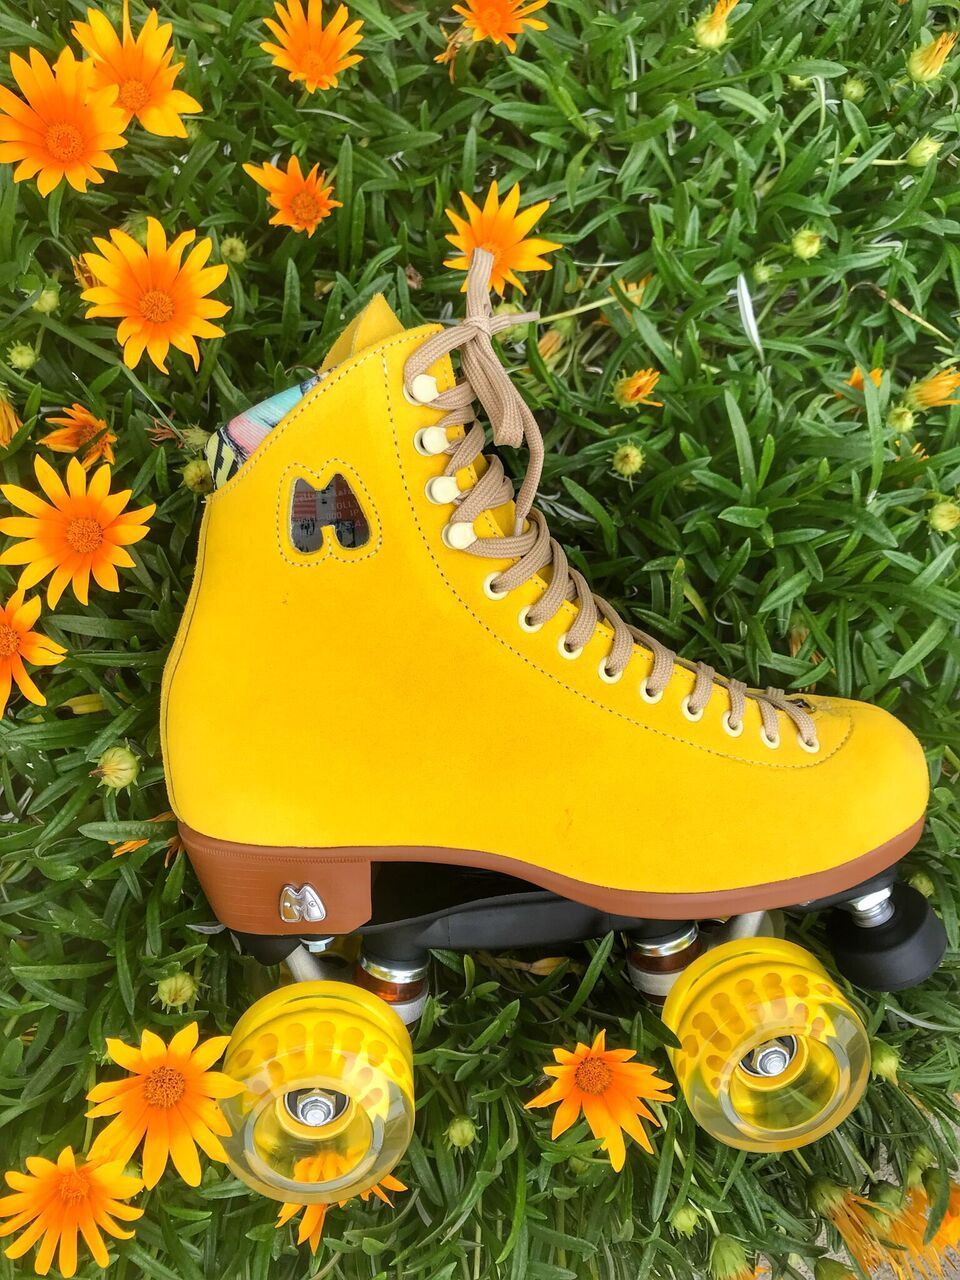 Moxi Lolly Skate - Pineapple Yellow